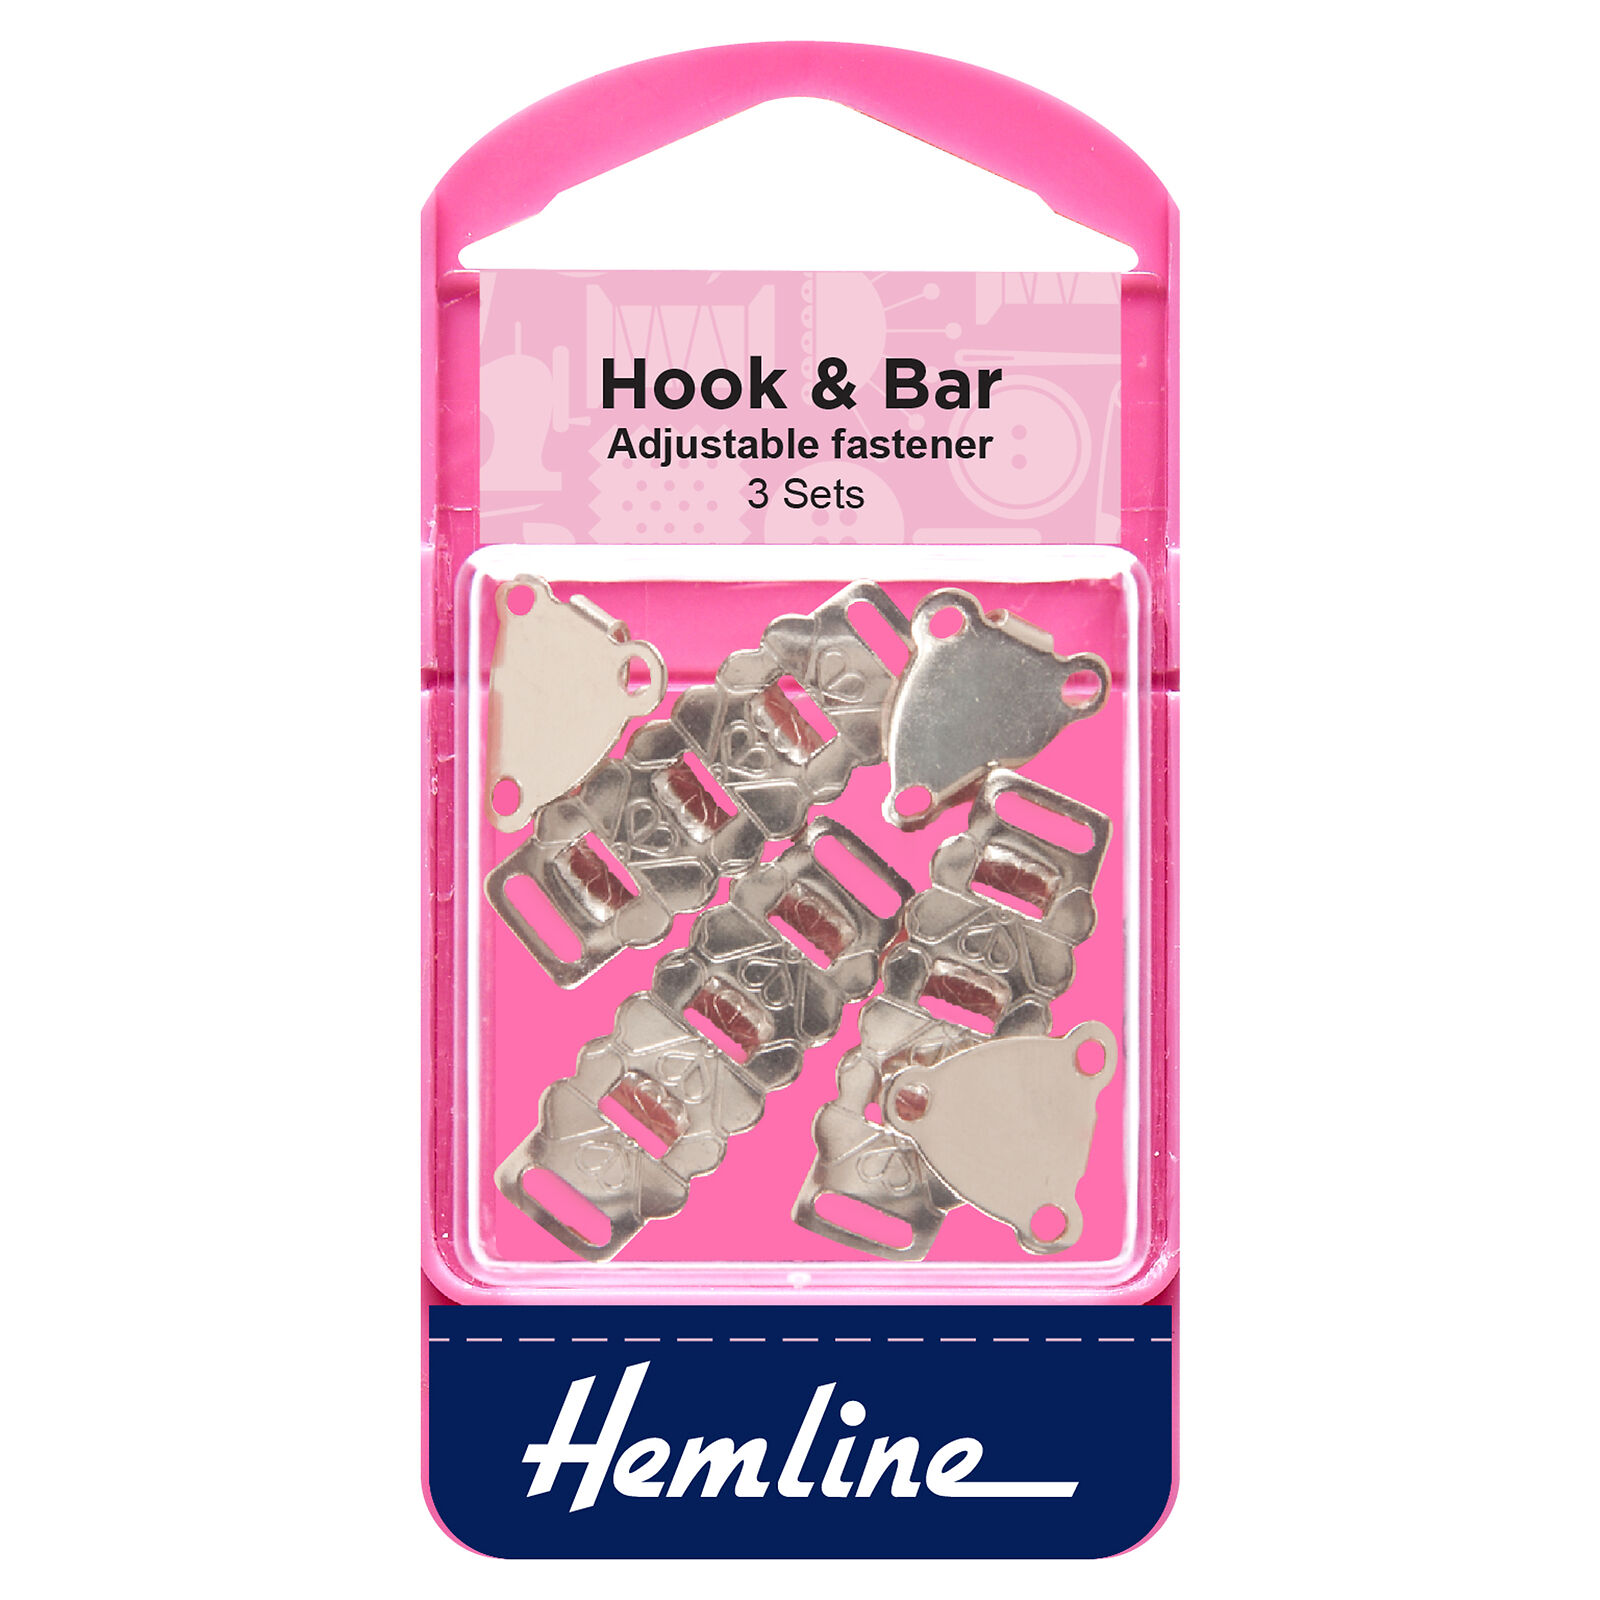 Hemline Adjustable Nickel Hook & Bar 3 Pack